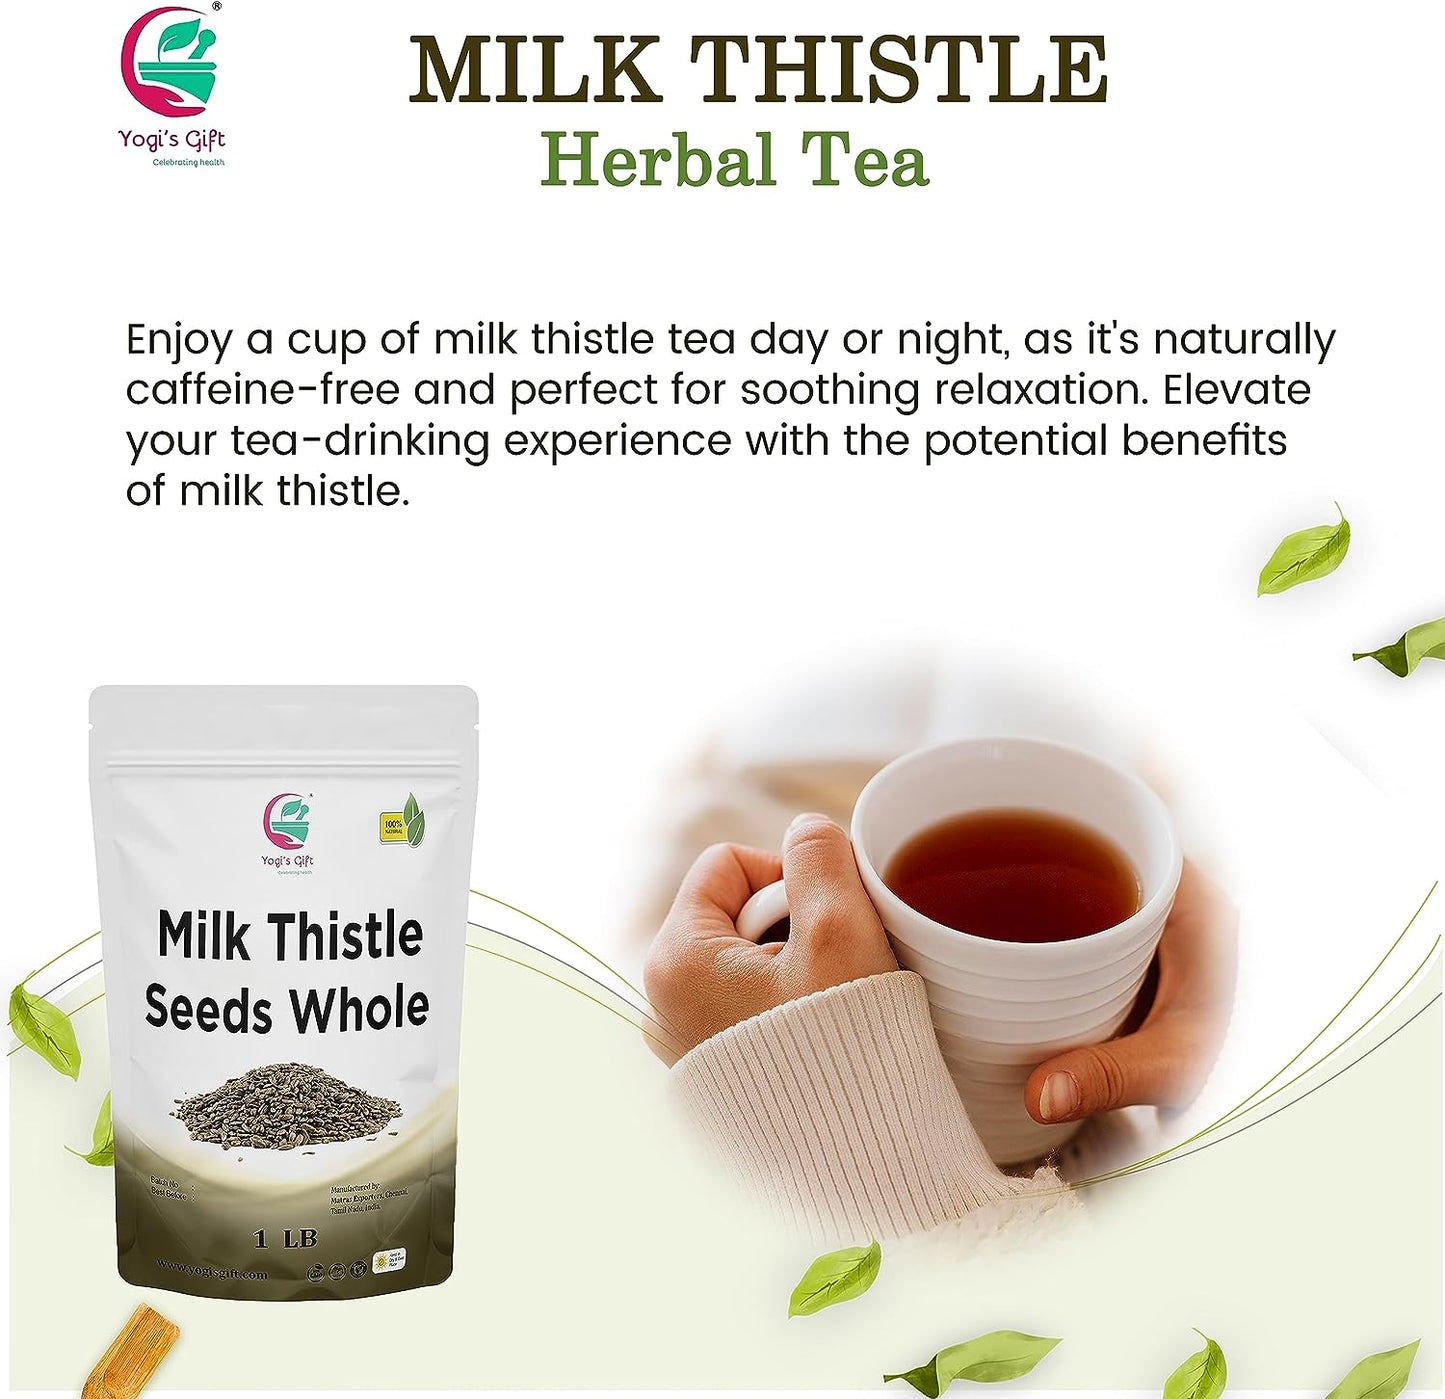 Milk Thistle Seeds 1 LB | Whole Milk Thistle for Tea | by Yogi's Gift®